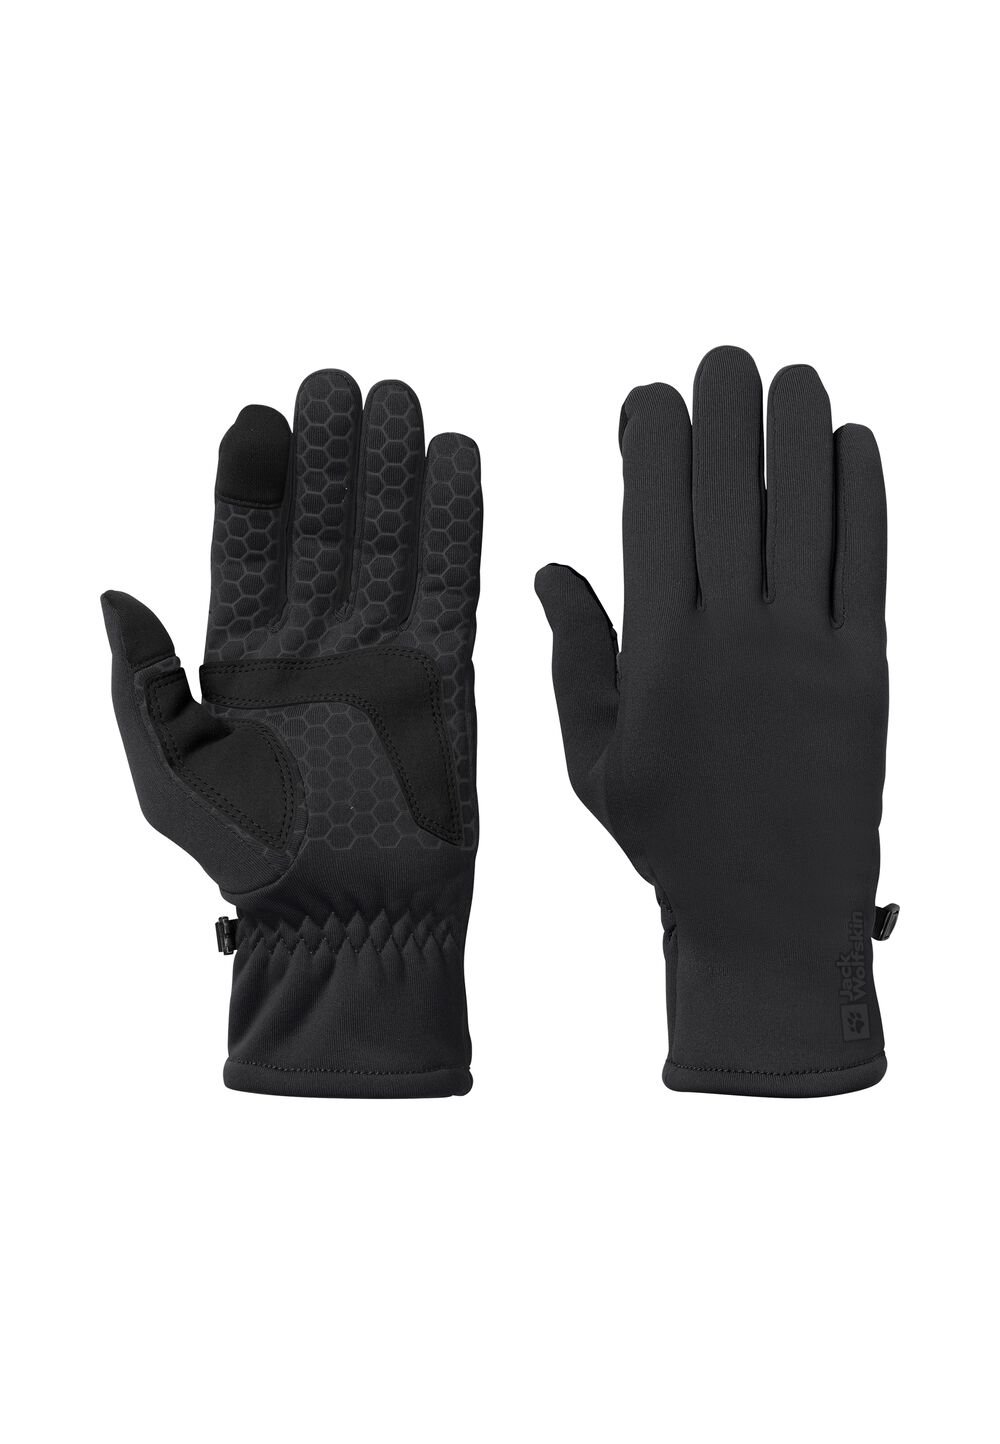 Jack Wolfskin Allrounder Glove Fleece handschoenen XS zwart black